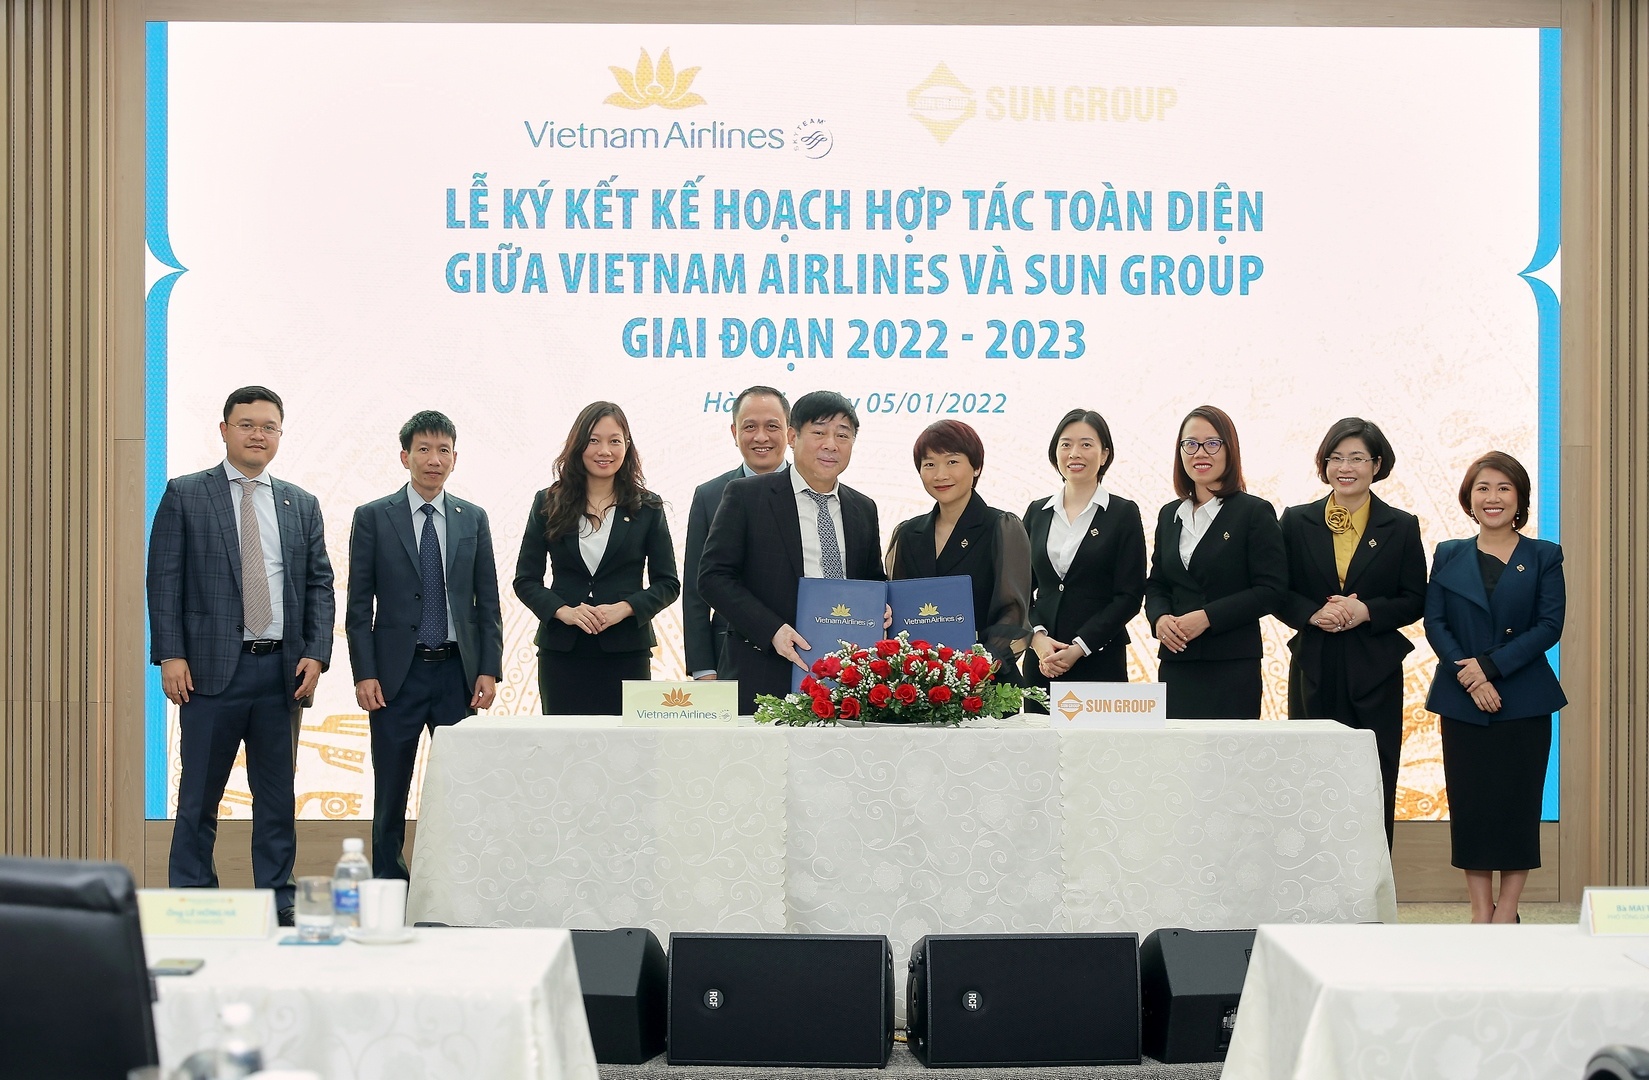 tap doan sun group va vietnam airlines mo rong hop tac chien luoc giai doan 2022 2023